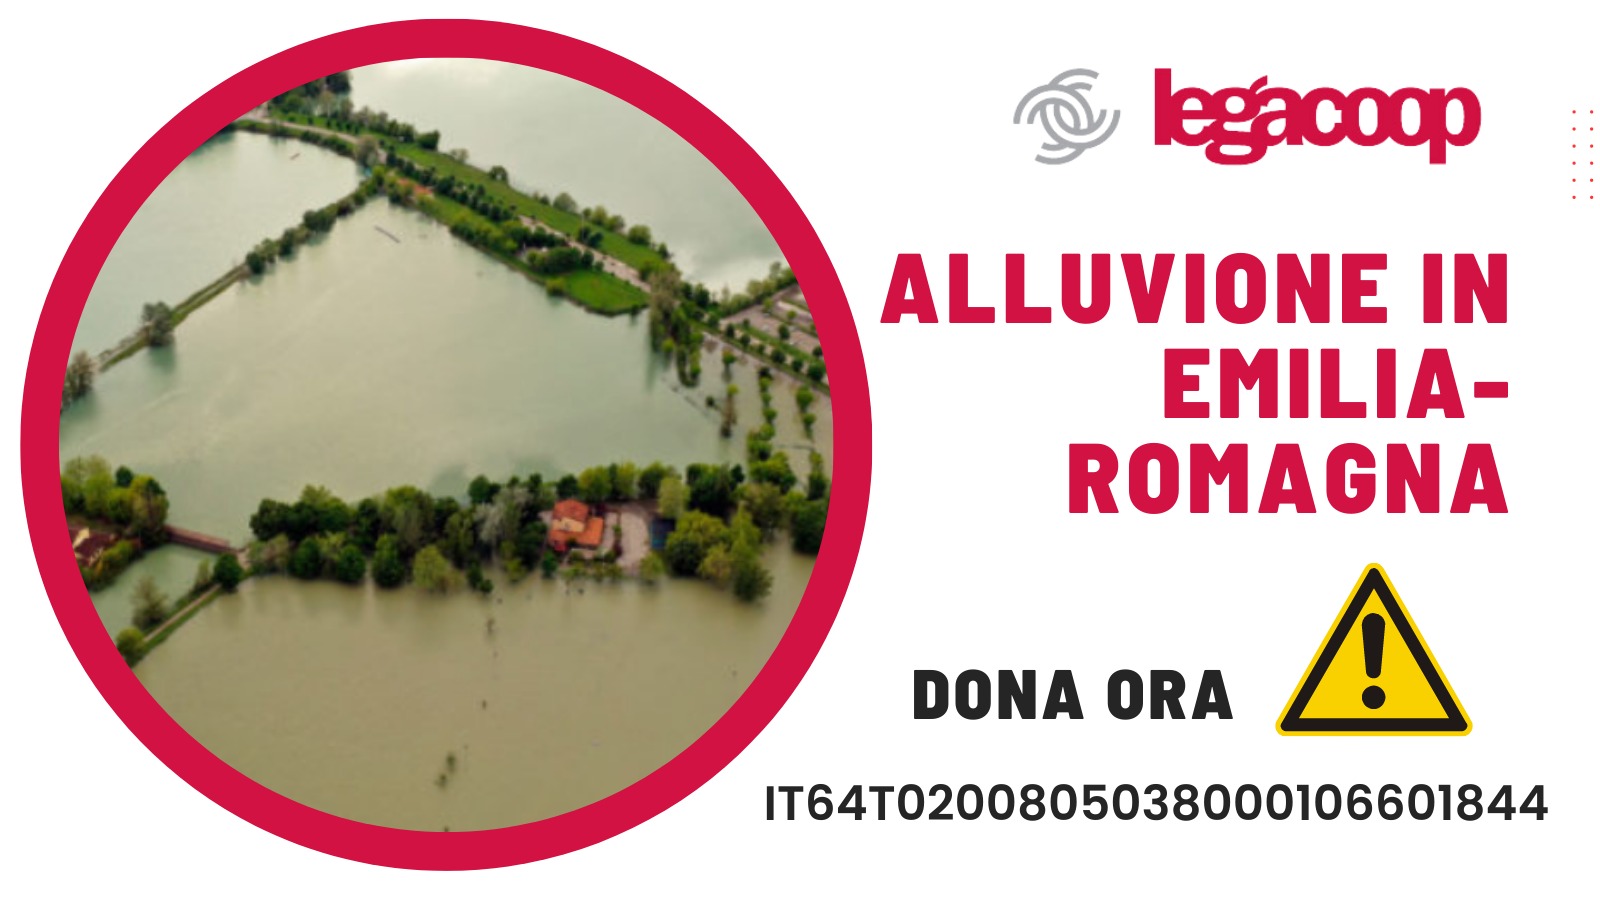 Alluvione in Emilia-Romagna: al via campagna di raccolta fondi per i territori colpiti promossa da Legacoop